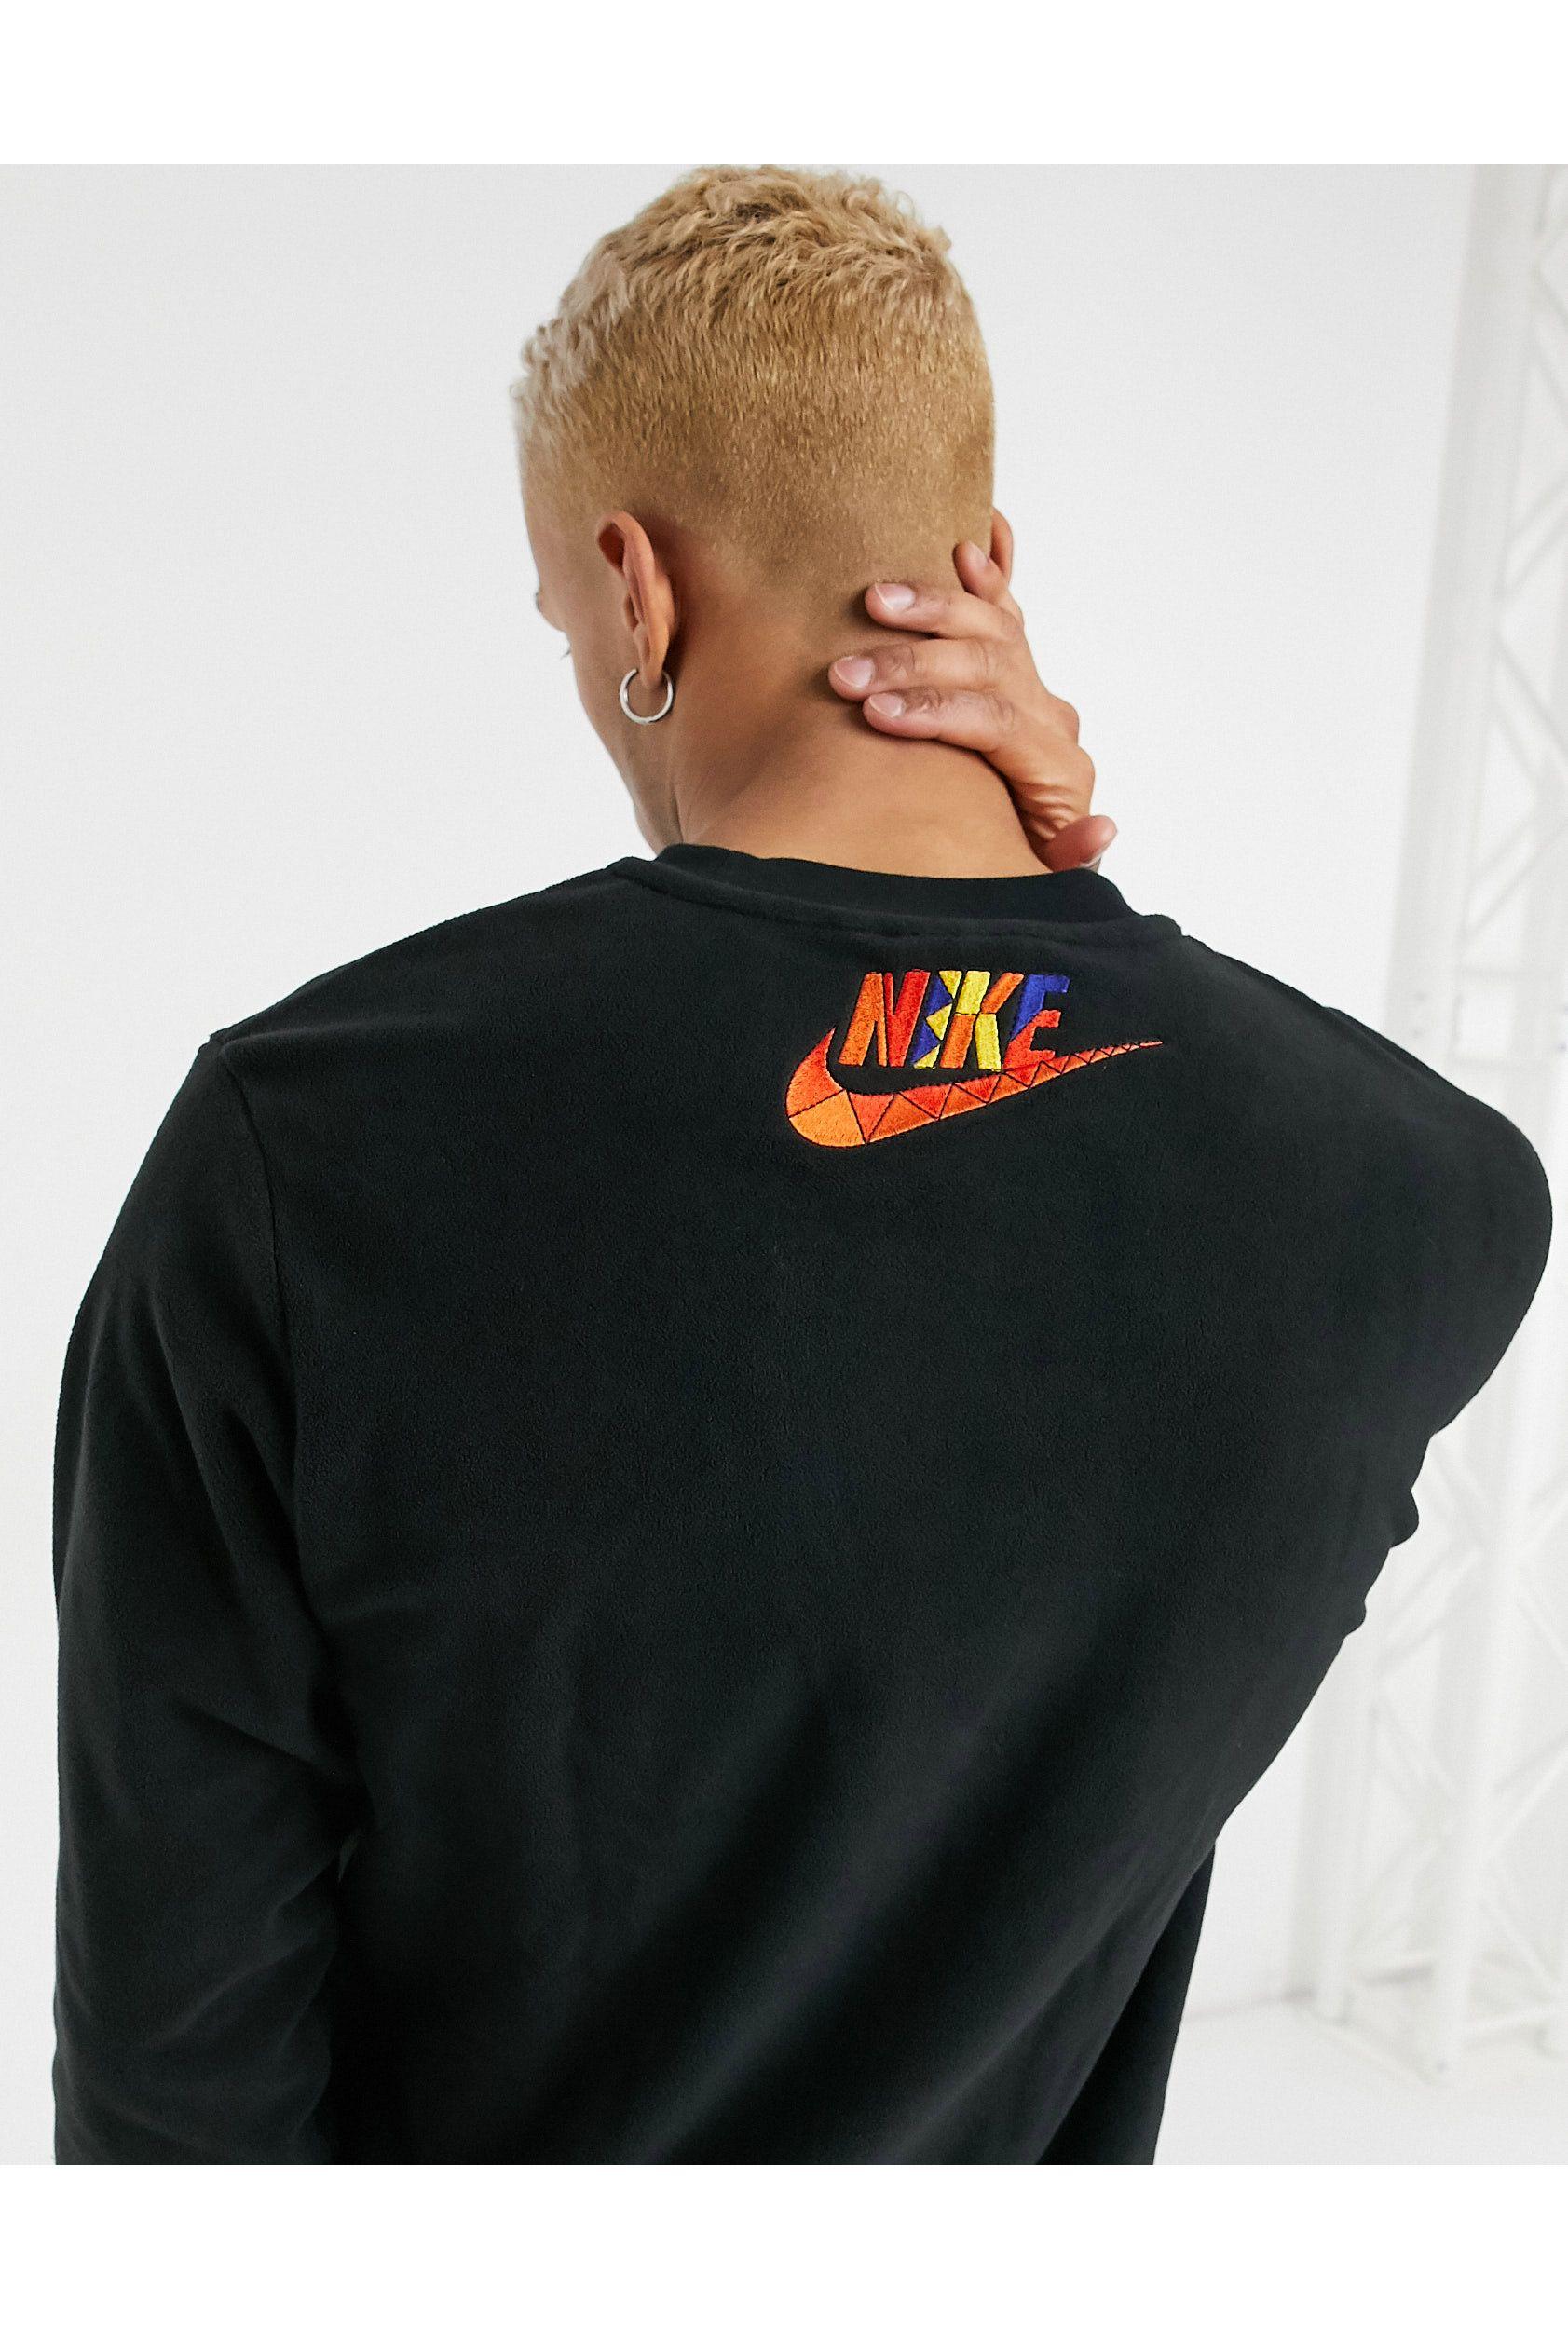 Nike Reissue Just Do It Crewneck Sweatshirt in Black for Men - Lyst